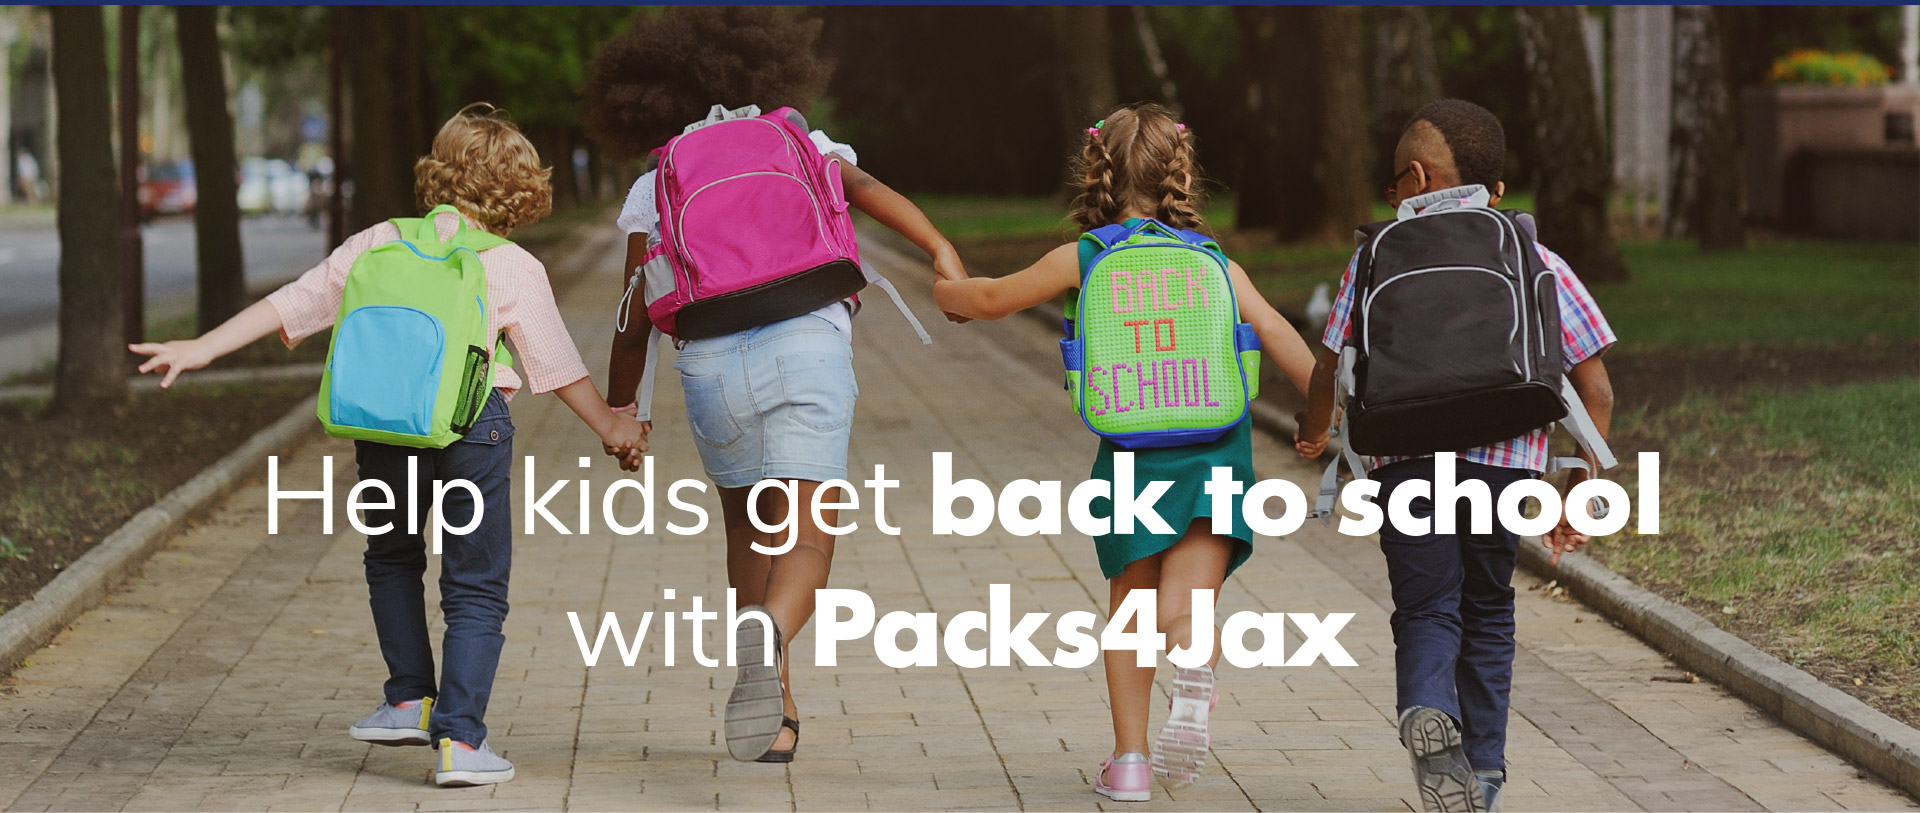 FSS Packs 4 Jax school supply program